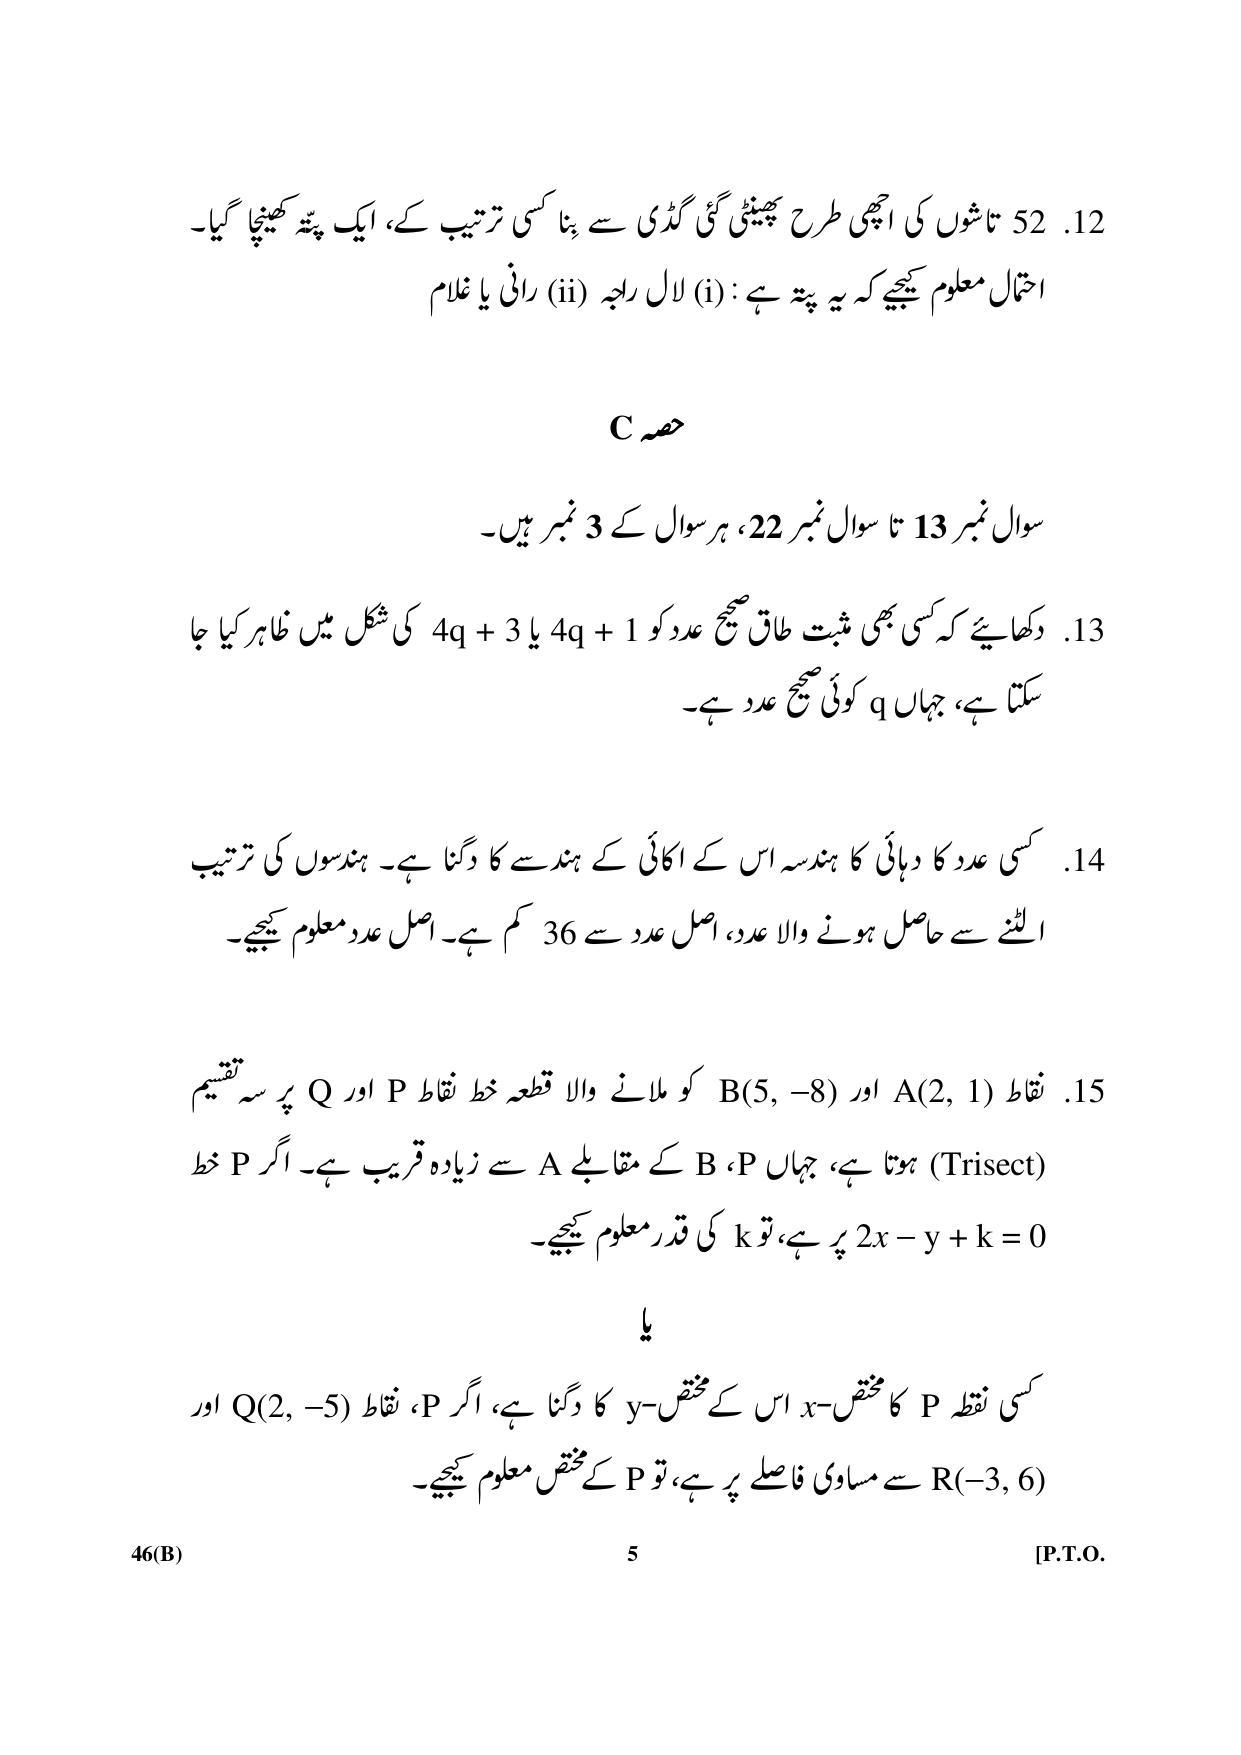 CBSE Class 10 46(B) Maths (For Blind) Urdu Version 2018 Question Paper - Page 5